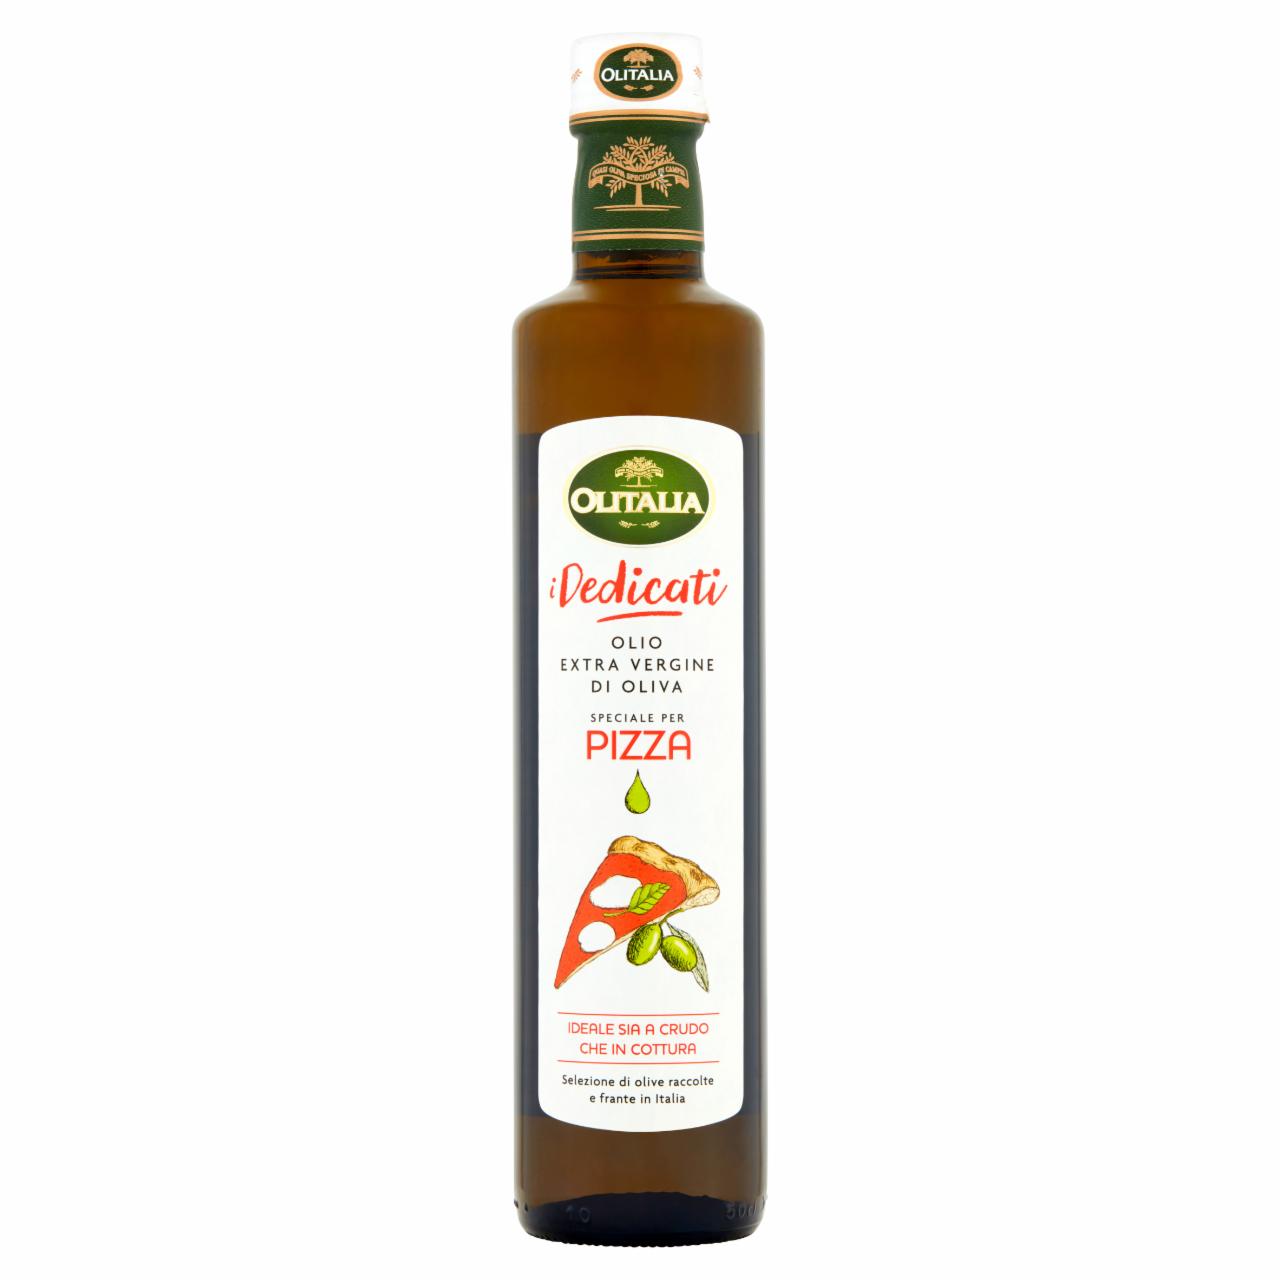 Photo - Olitalia i Dedicati Pizza Extra Vergine Olive Oil 500 ml